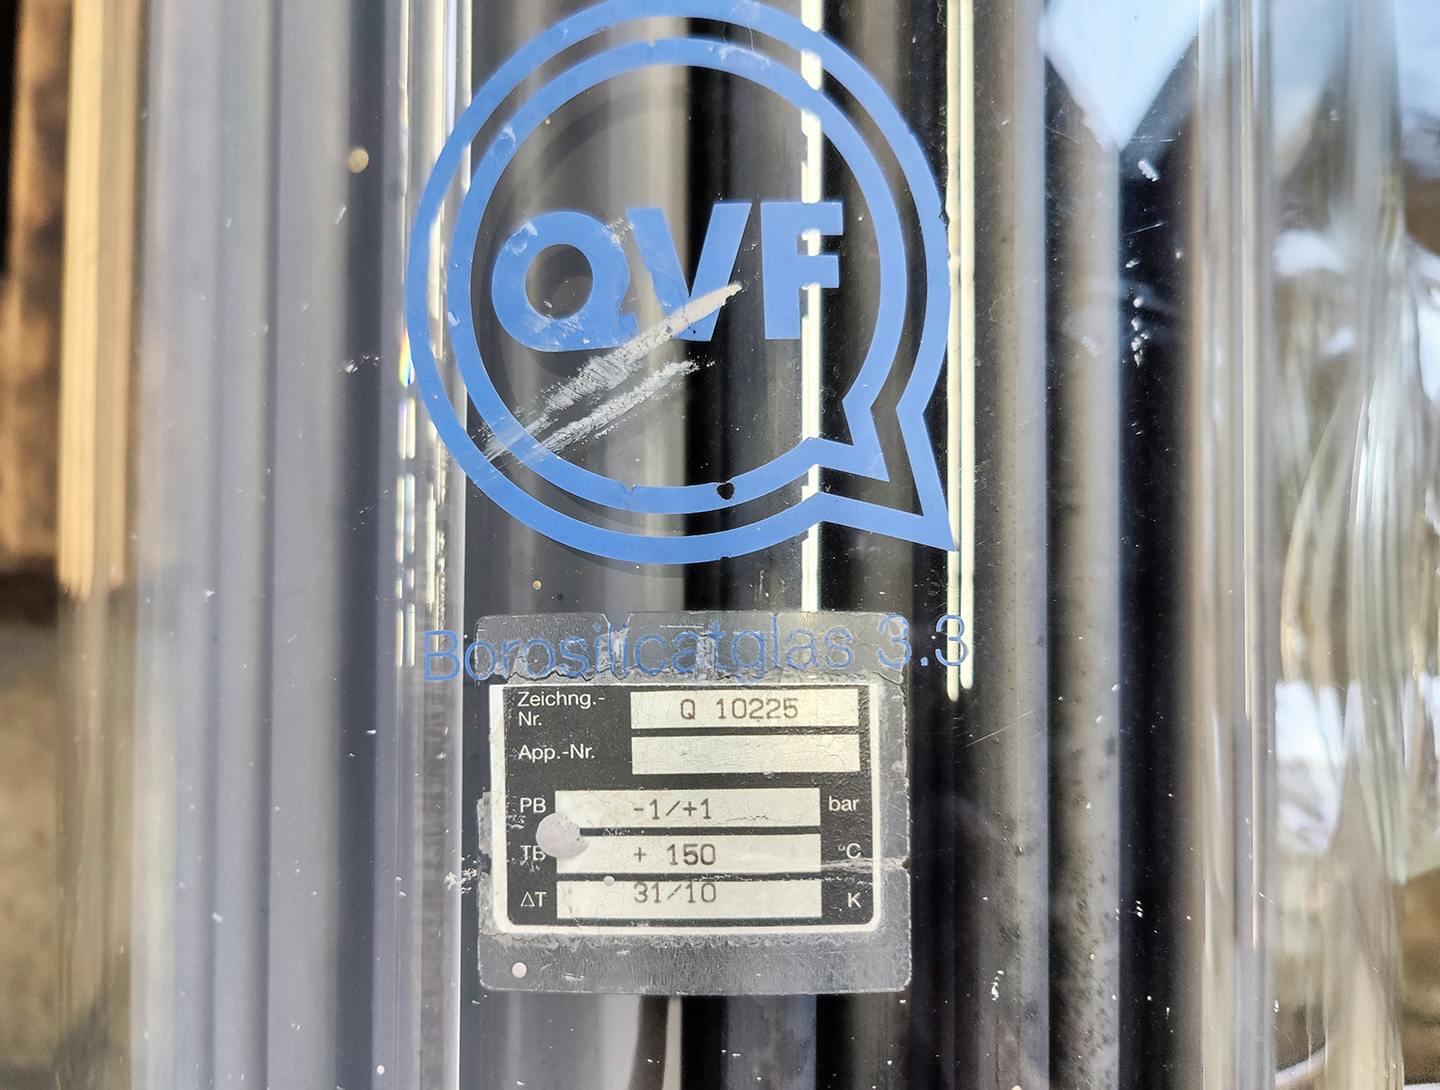 QVF Glasstechnik S-ROB71/300/SH/3SIC - 7,1 m² - Rohrbündelwärmetauscher - image 8